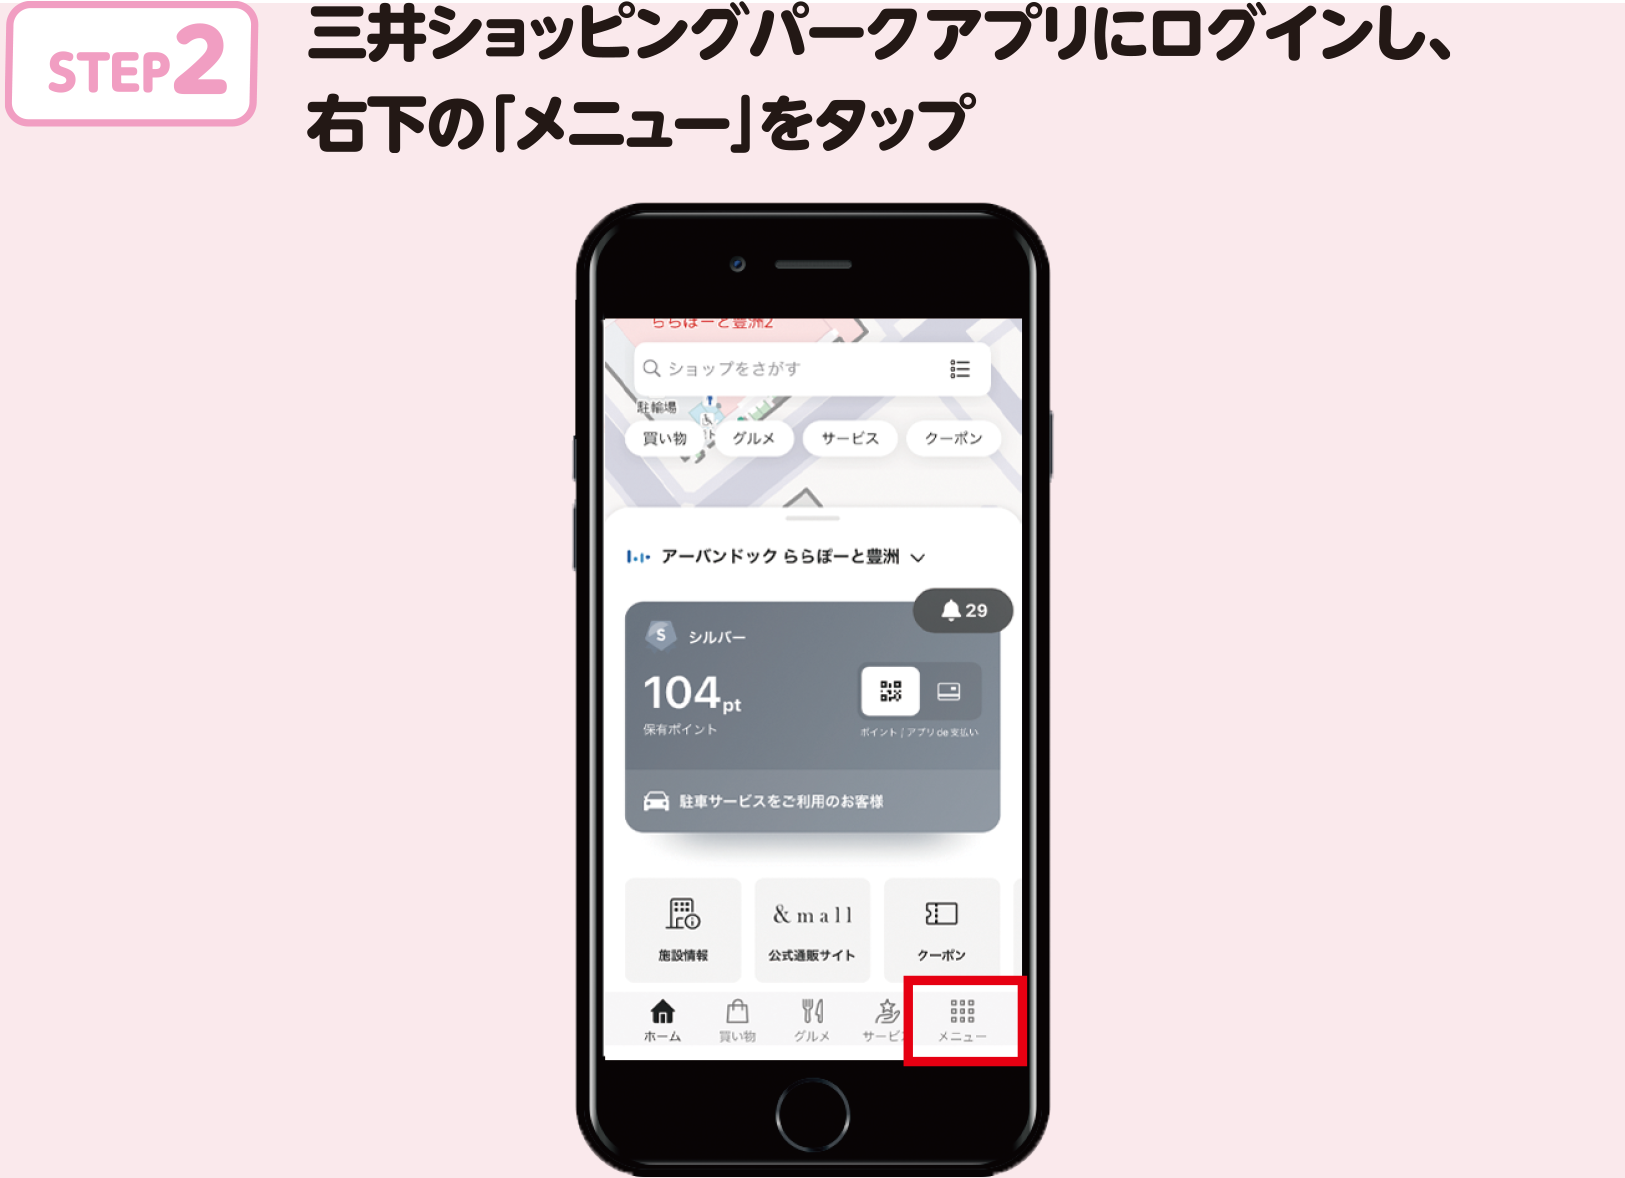 STEP.2 三井ショッピングパークアプリにログインし、右下の「メニュー」をタップ